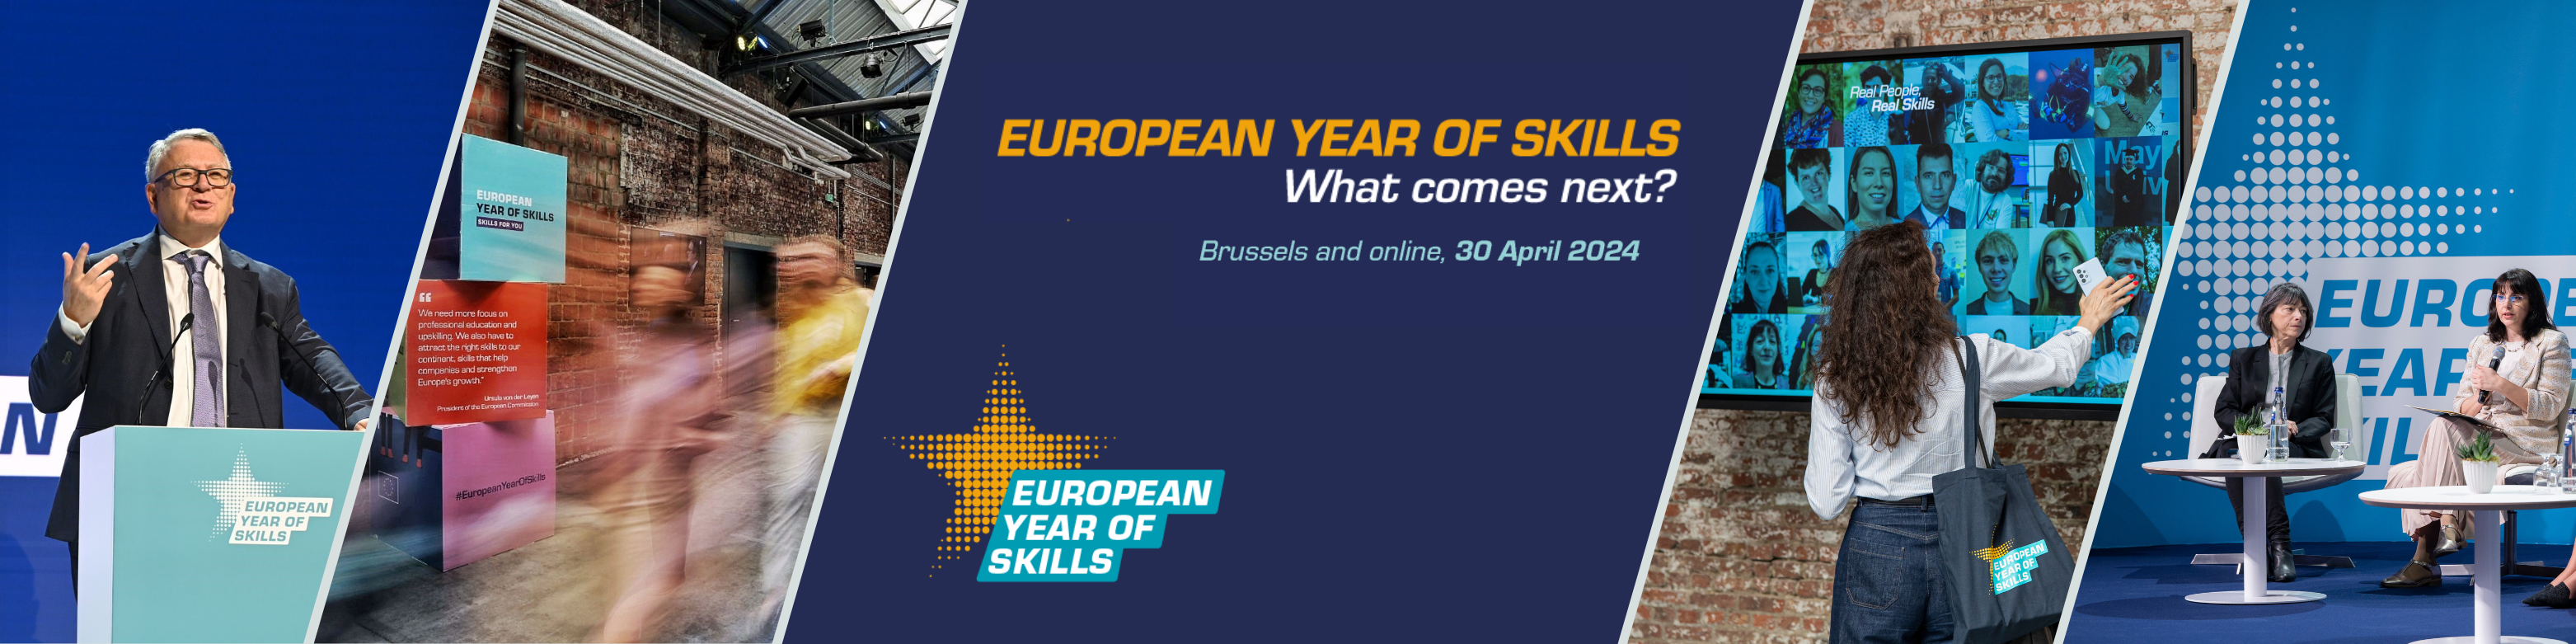 European Year of Skills Banner closing event. 